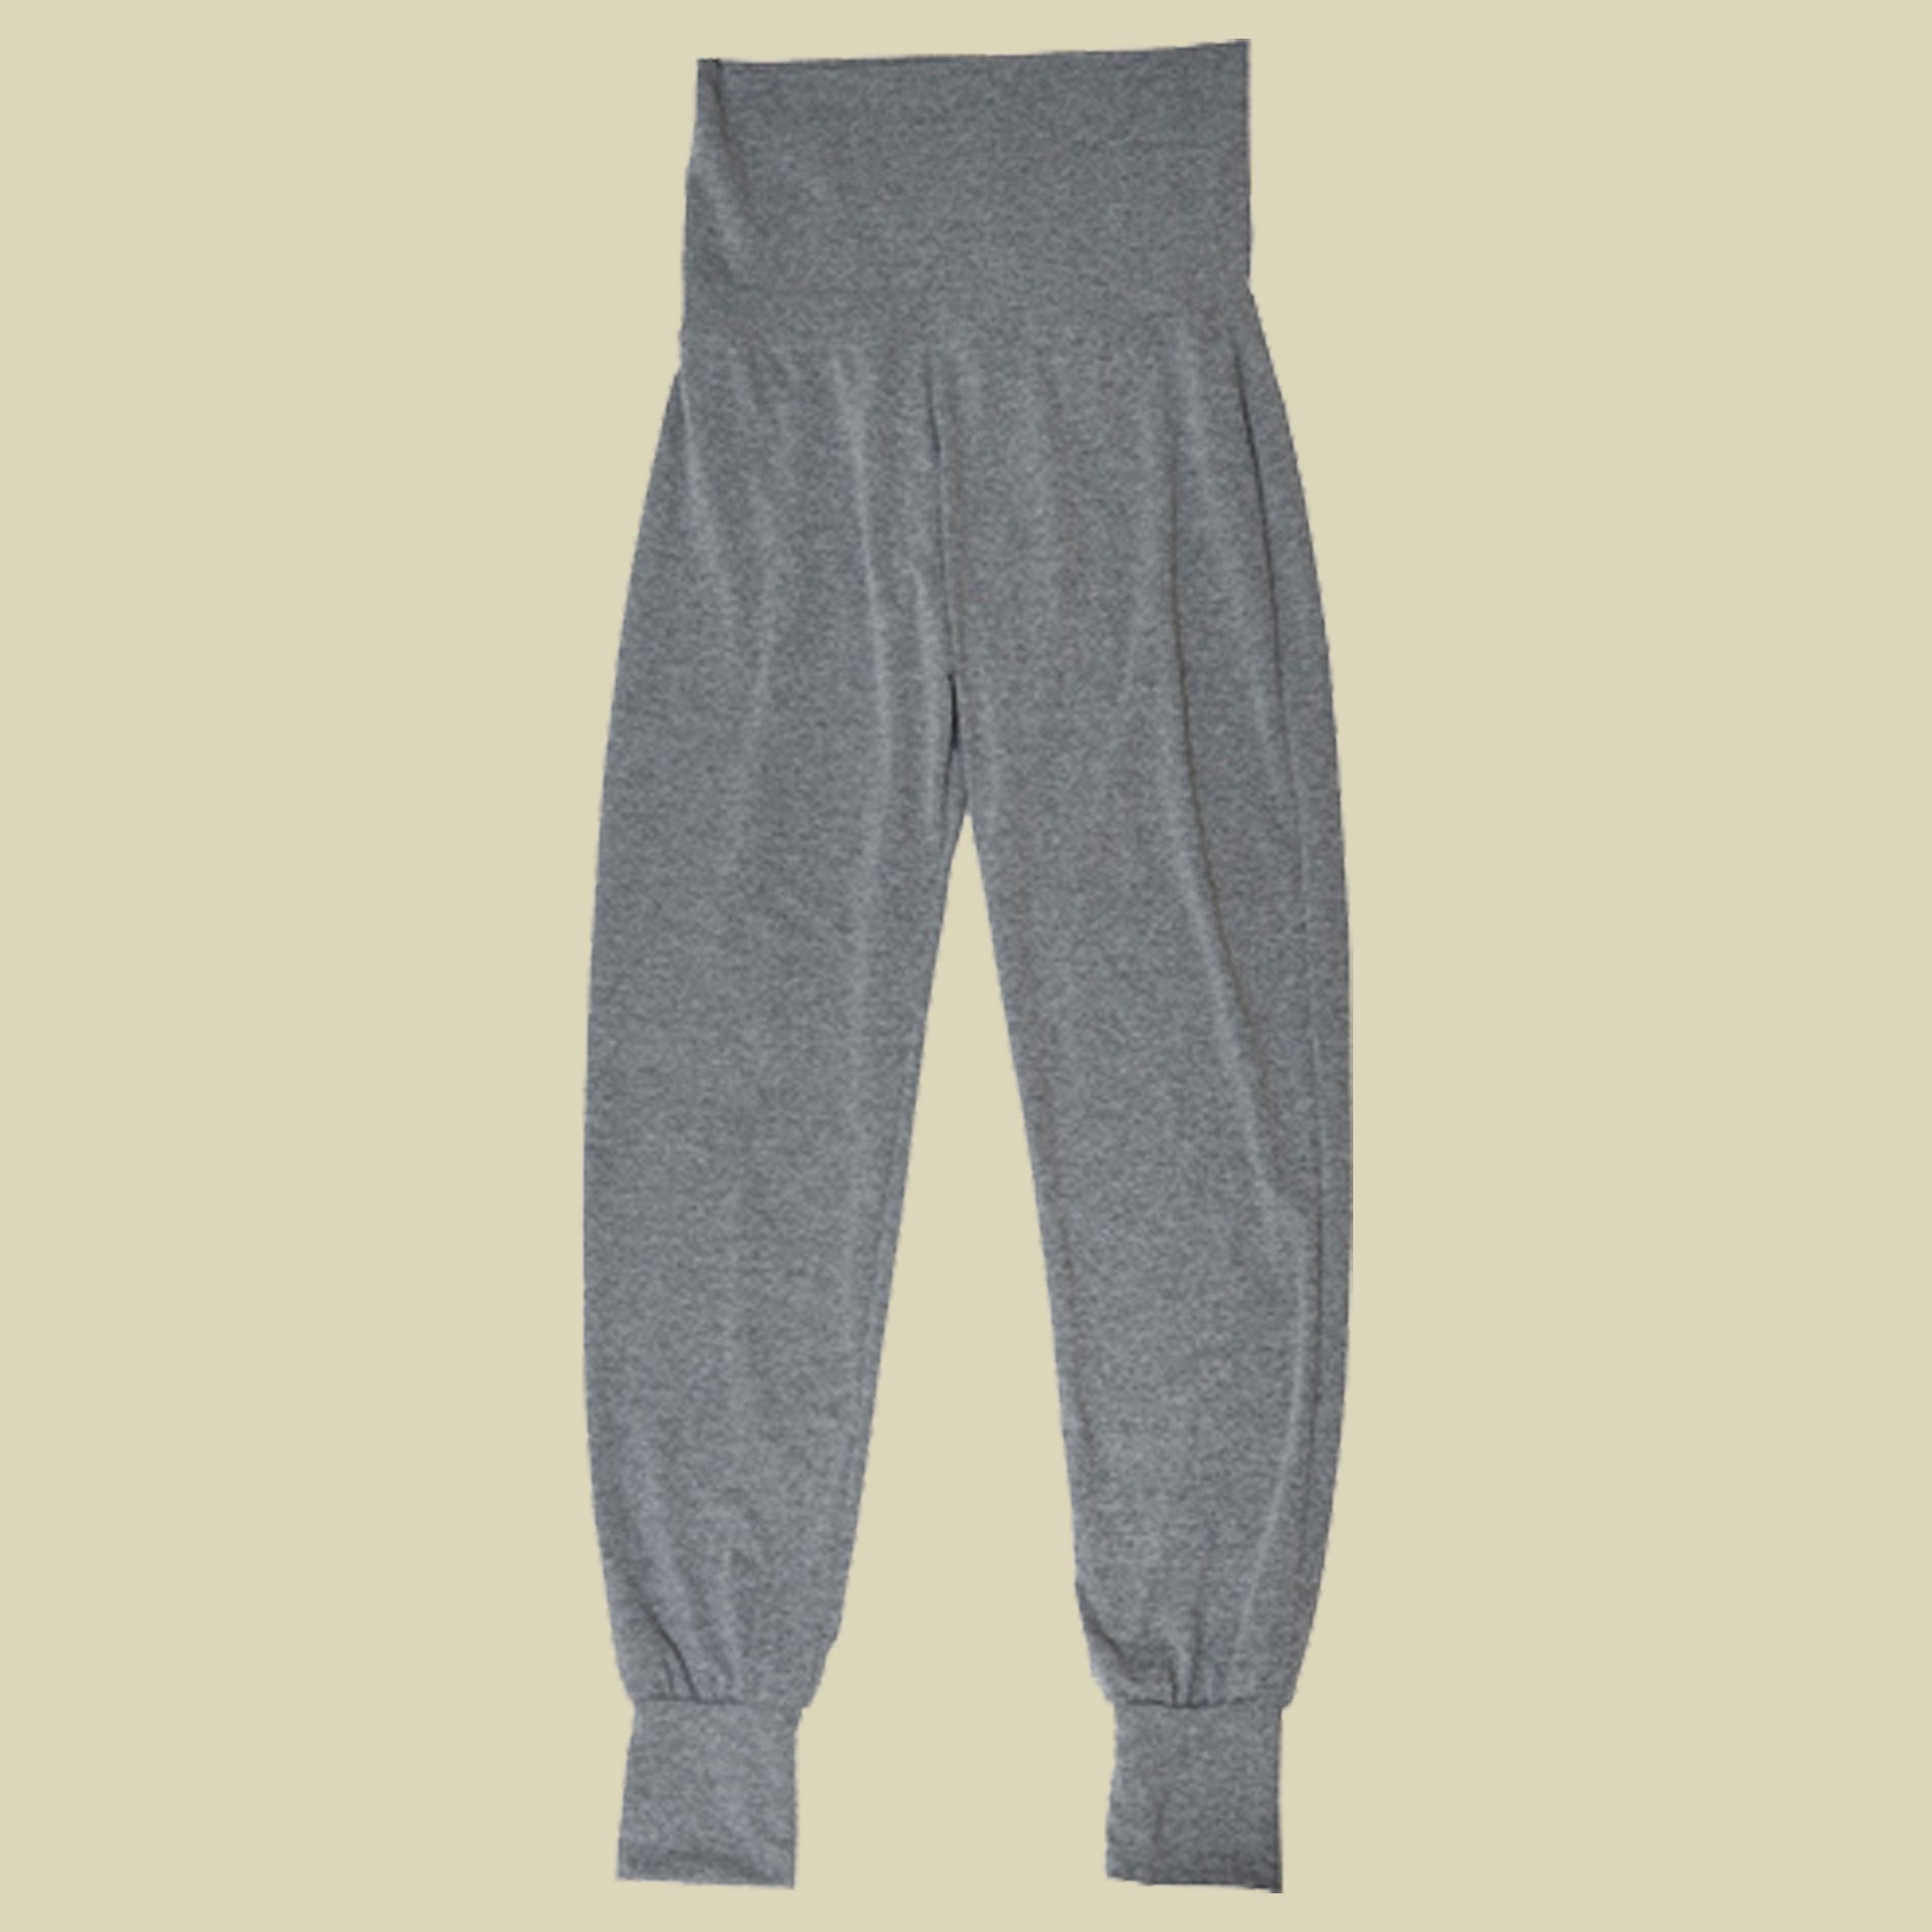 Atli Long Pants Women Größe L Farbe heather grey